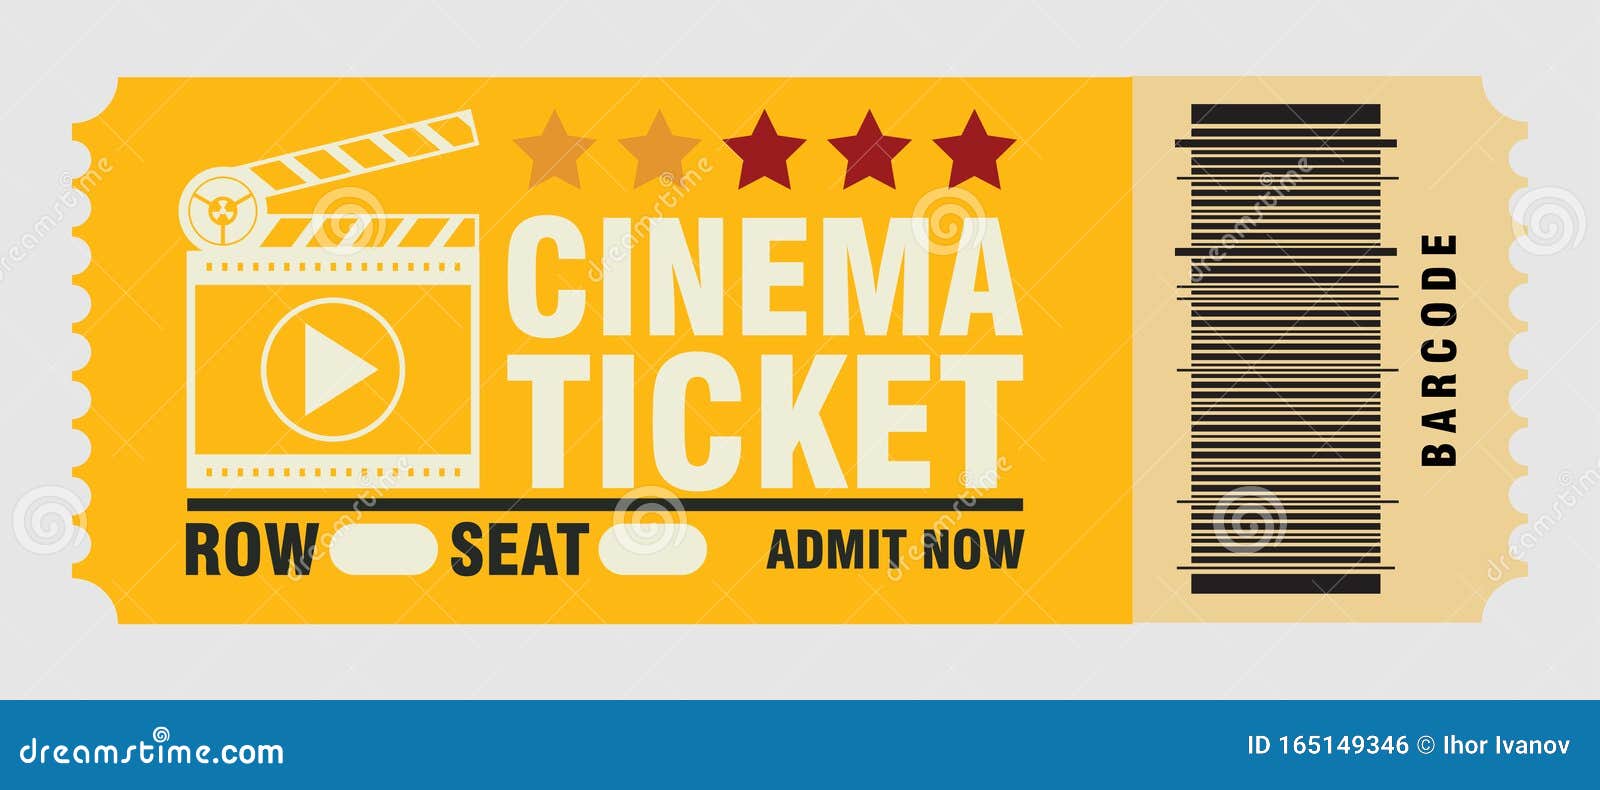 Cinema Ticket, Skip To Watch Movies, Realistic Look Stock Vector ...